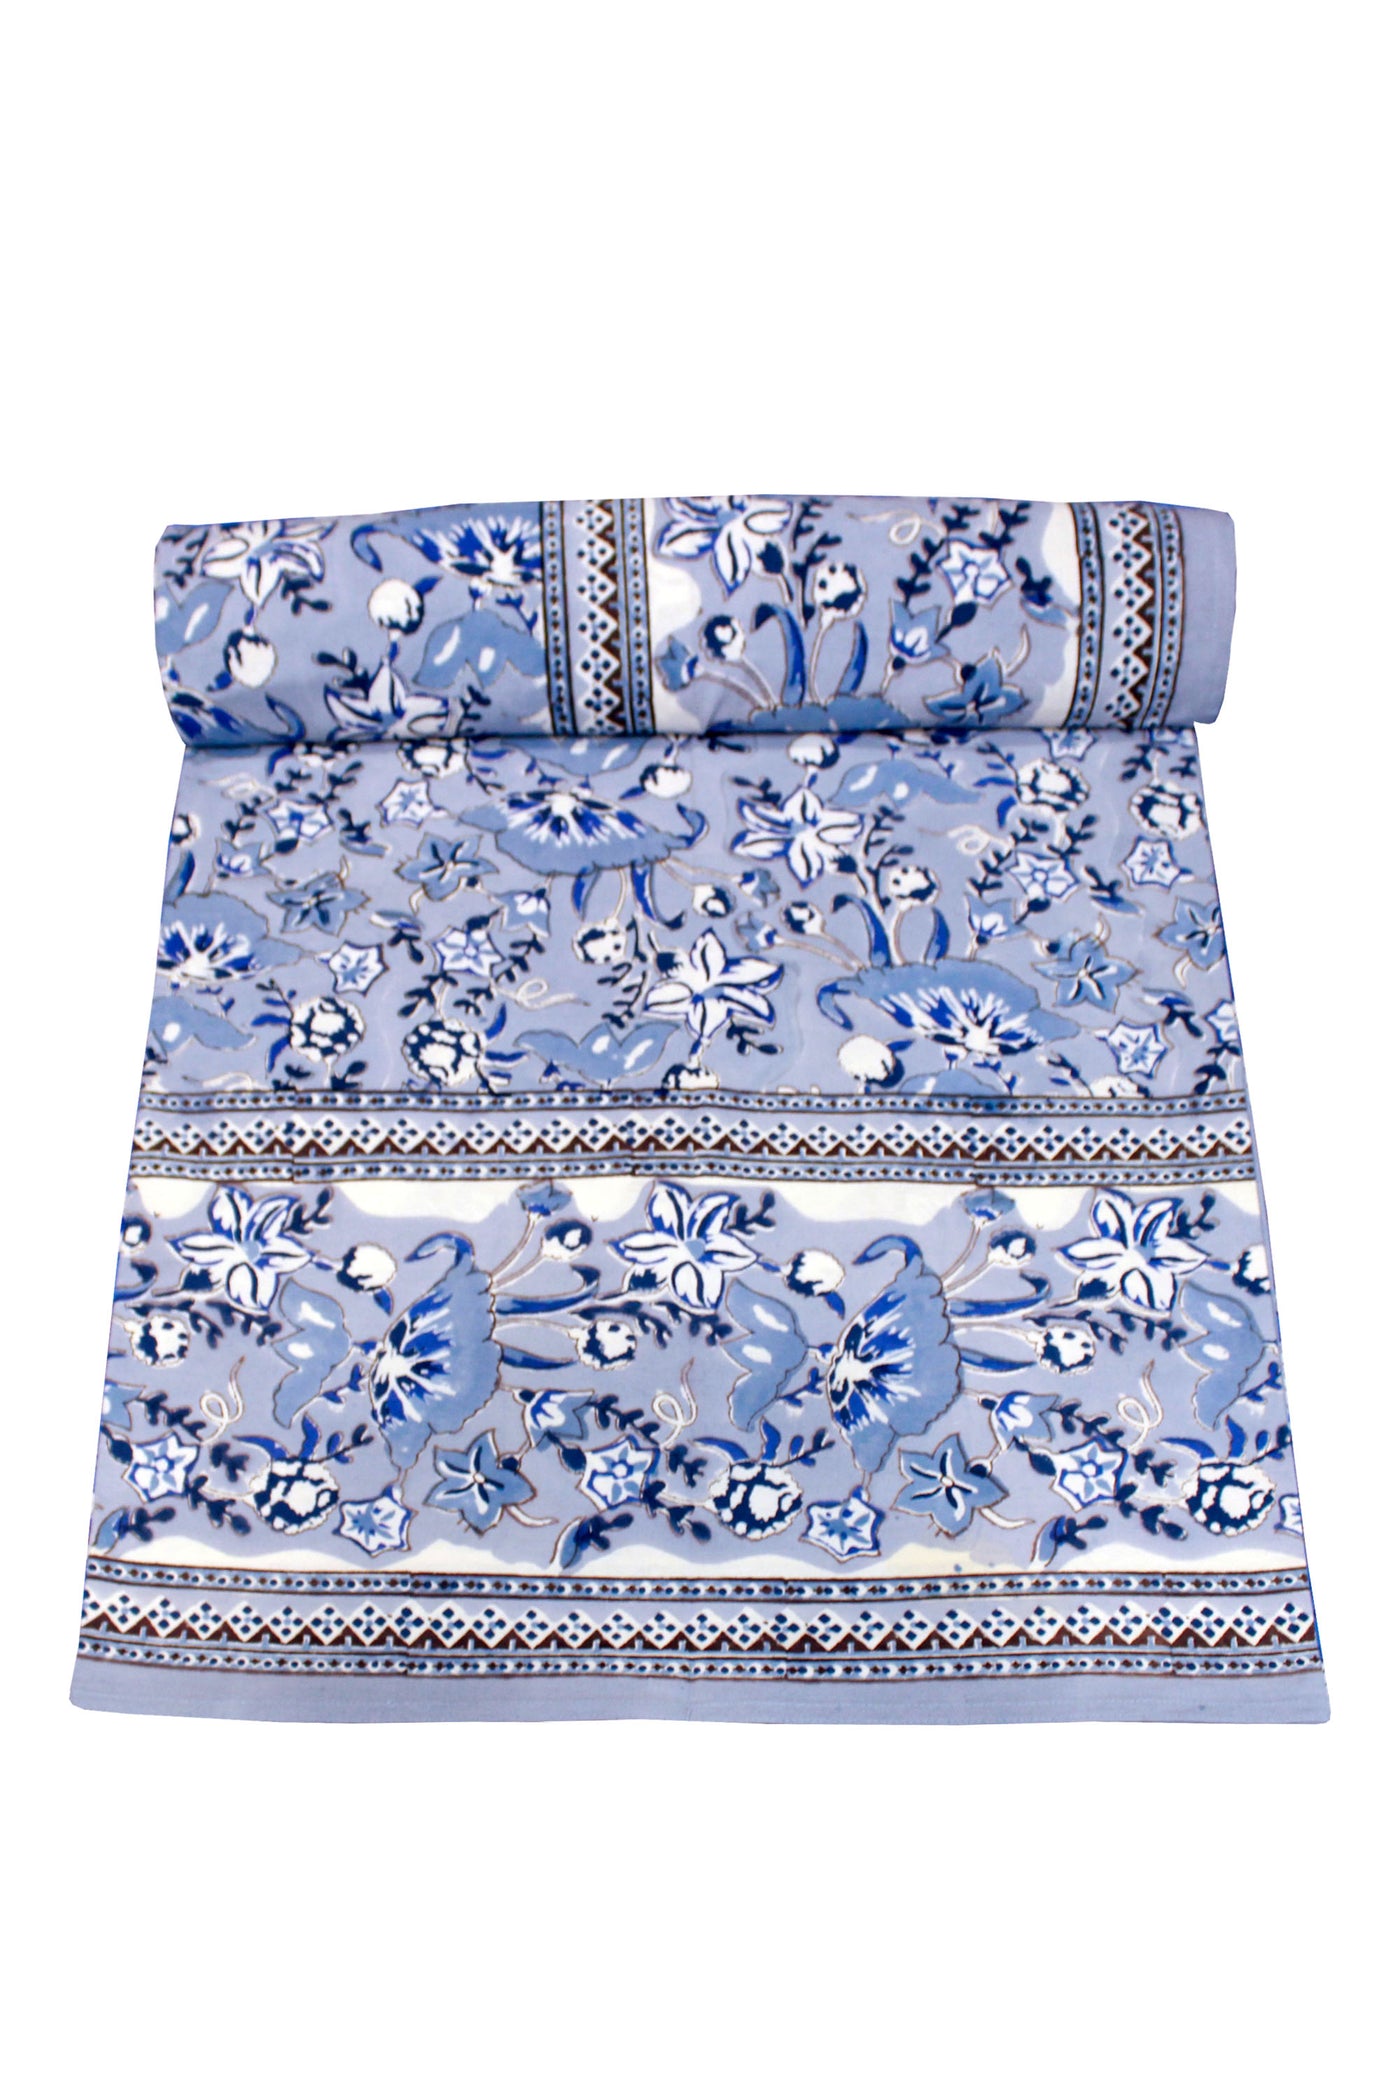 Cotton Flower Jaal Hand Block Print  Bedsheet in Powder Blue